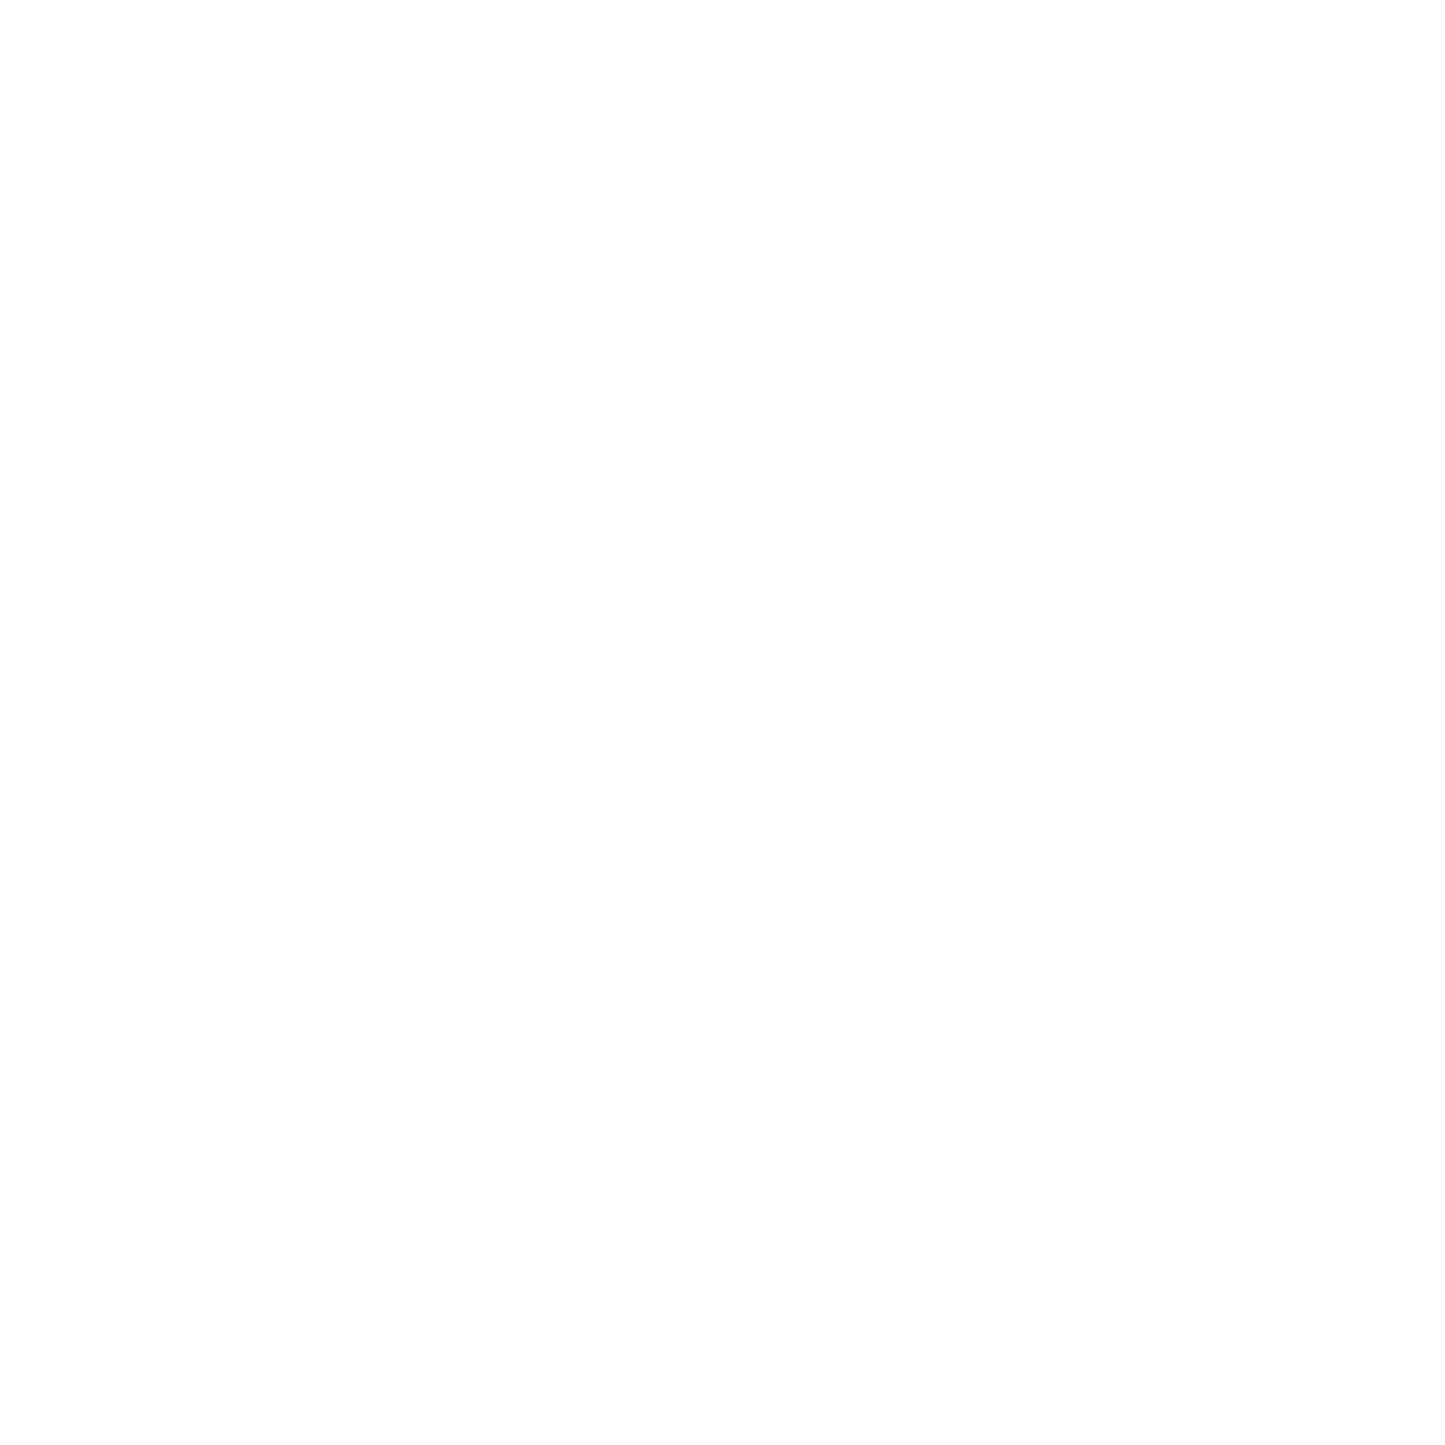 I Like Pie